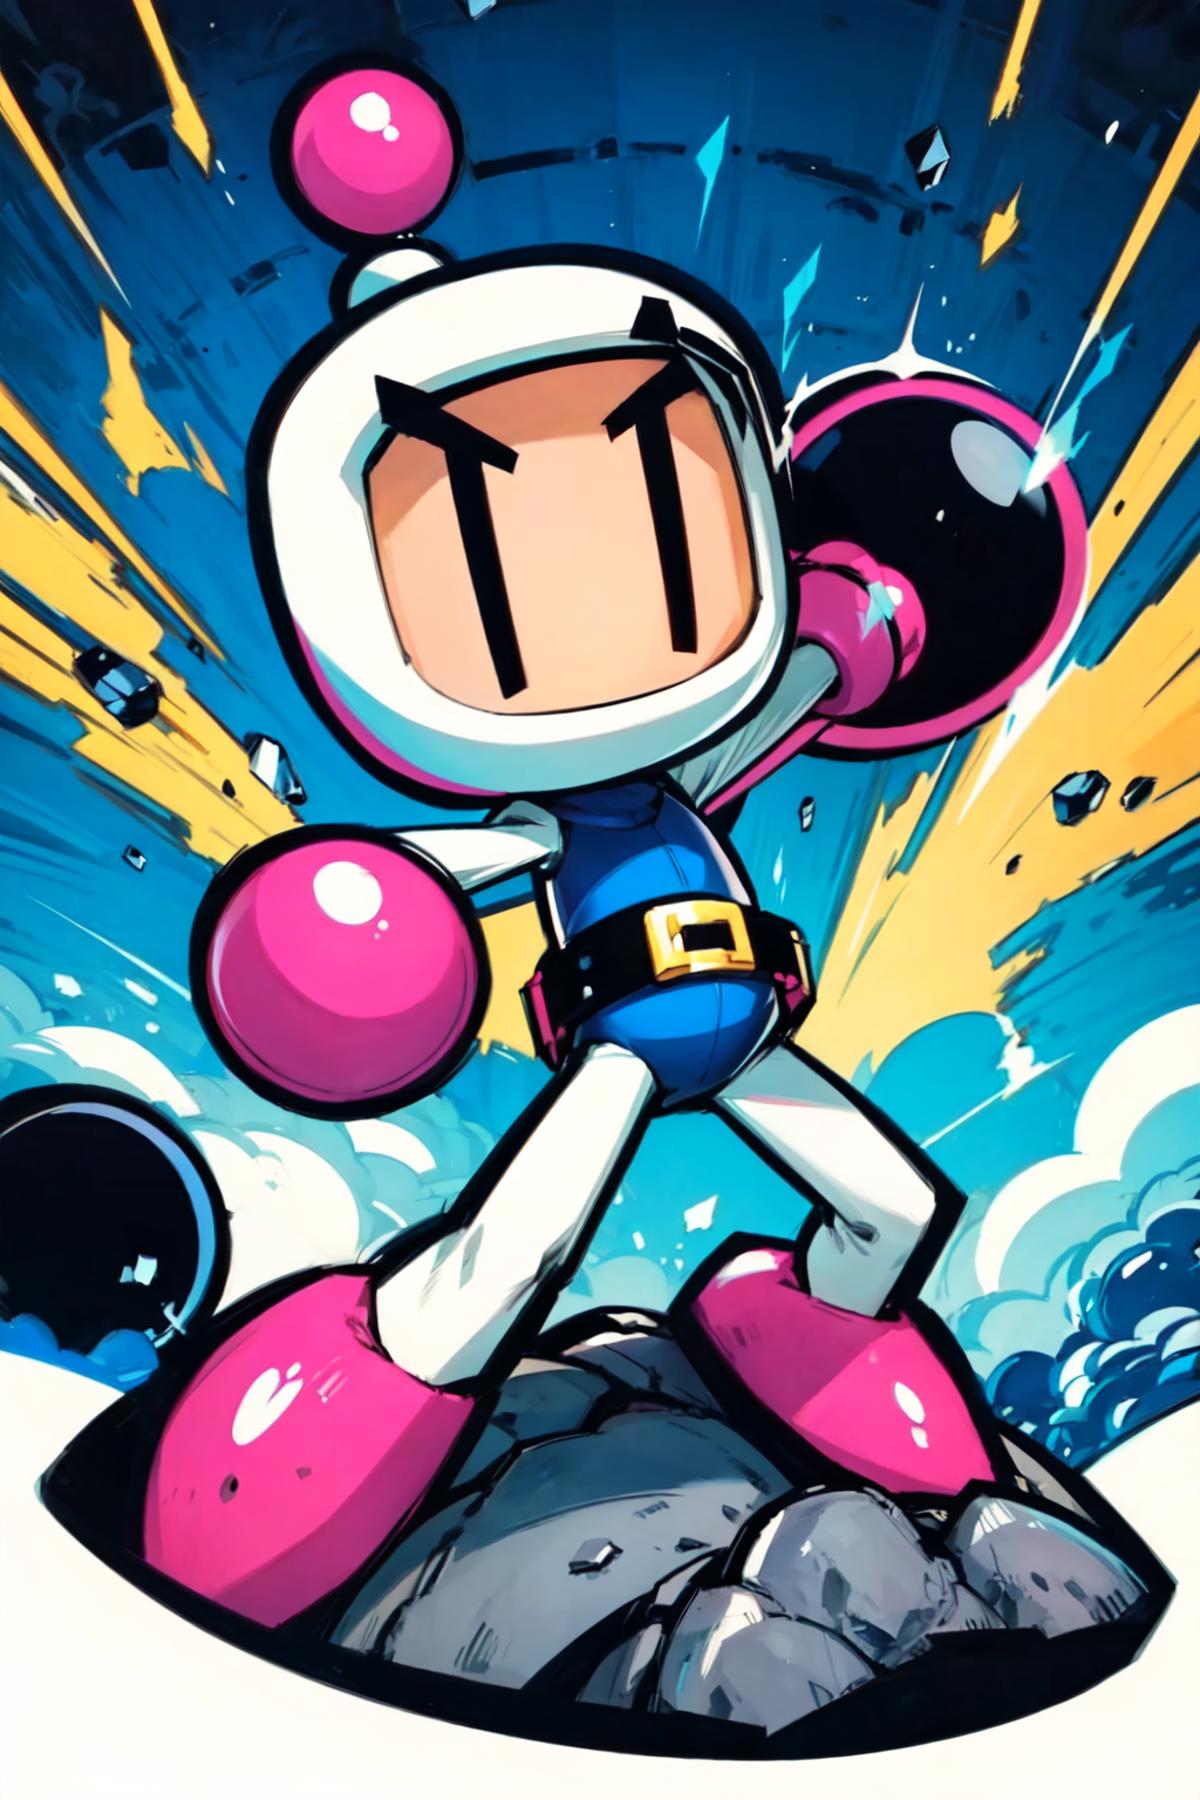 Bomberman image by Kayako